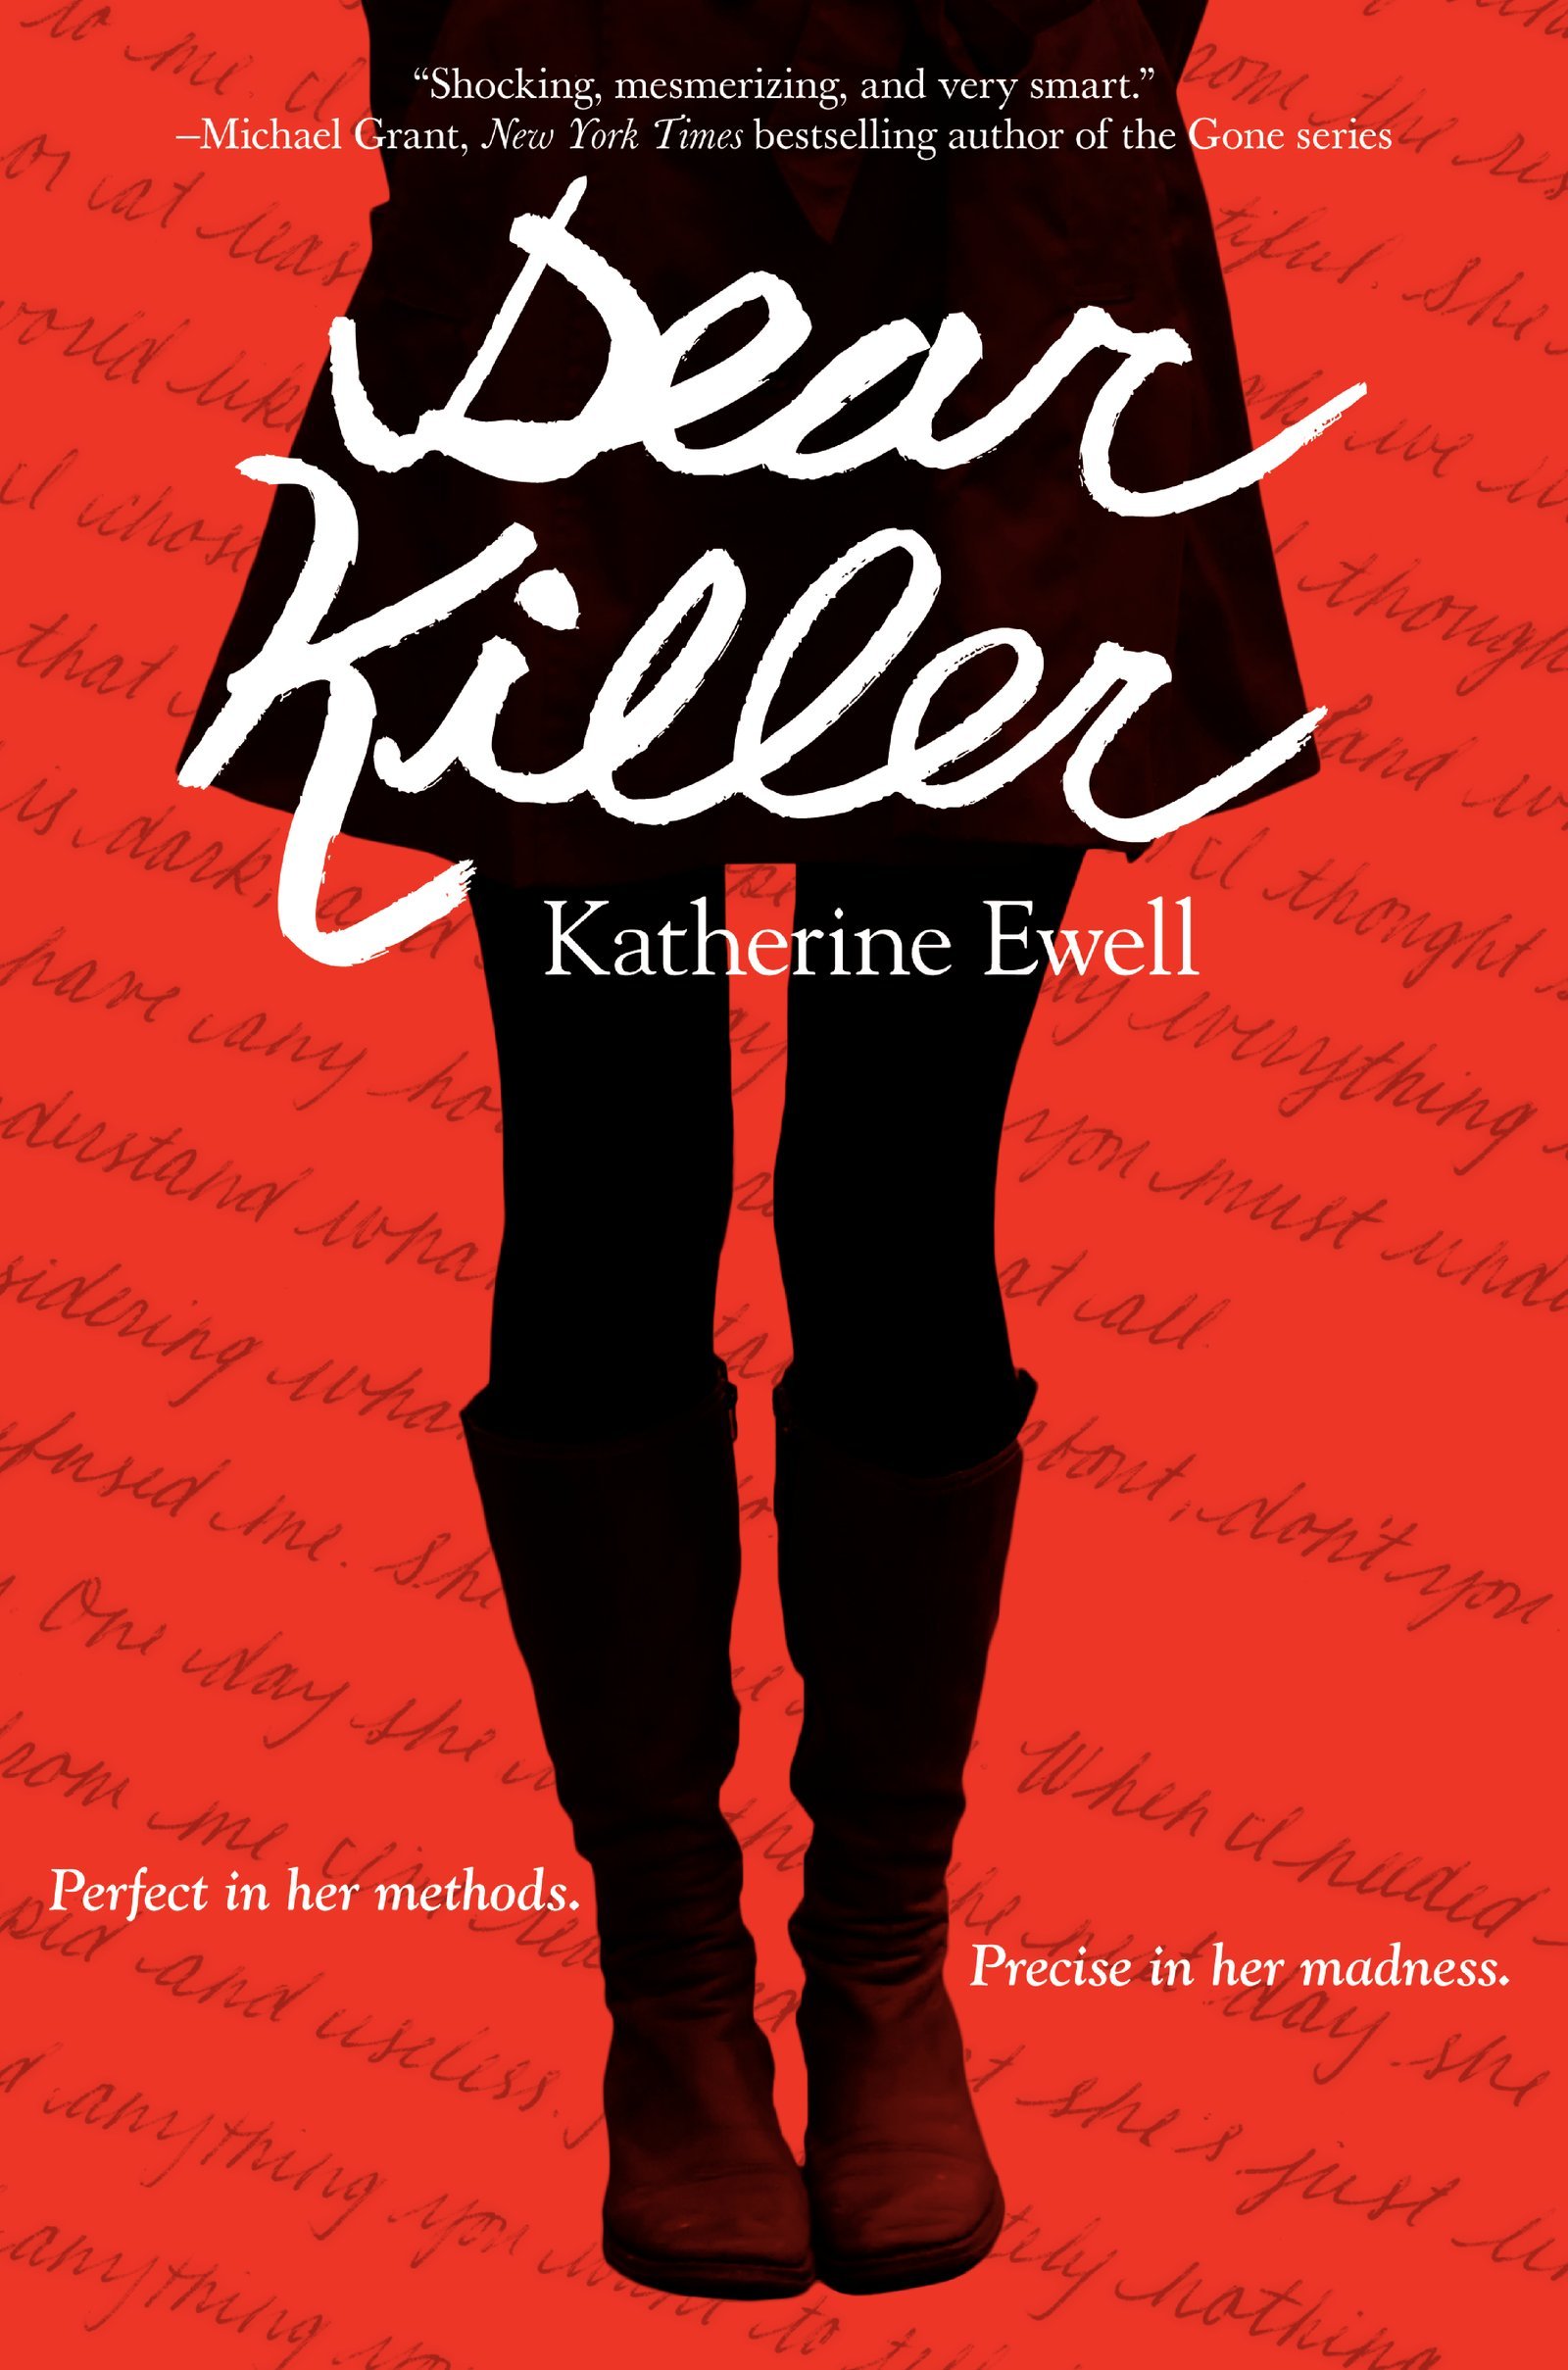 Book reviews: Dear Killer